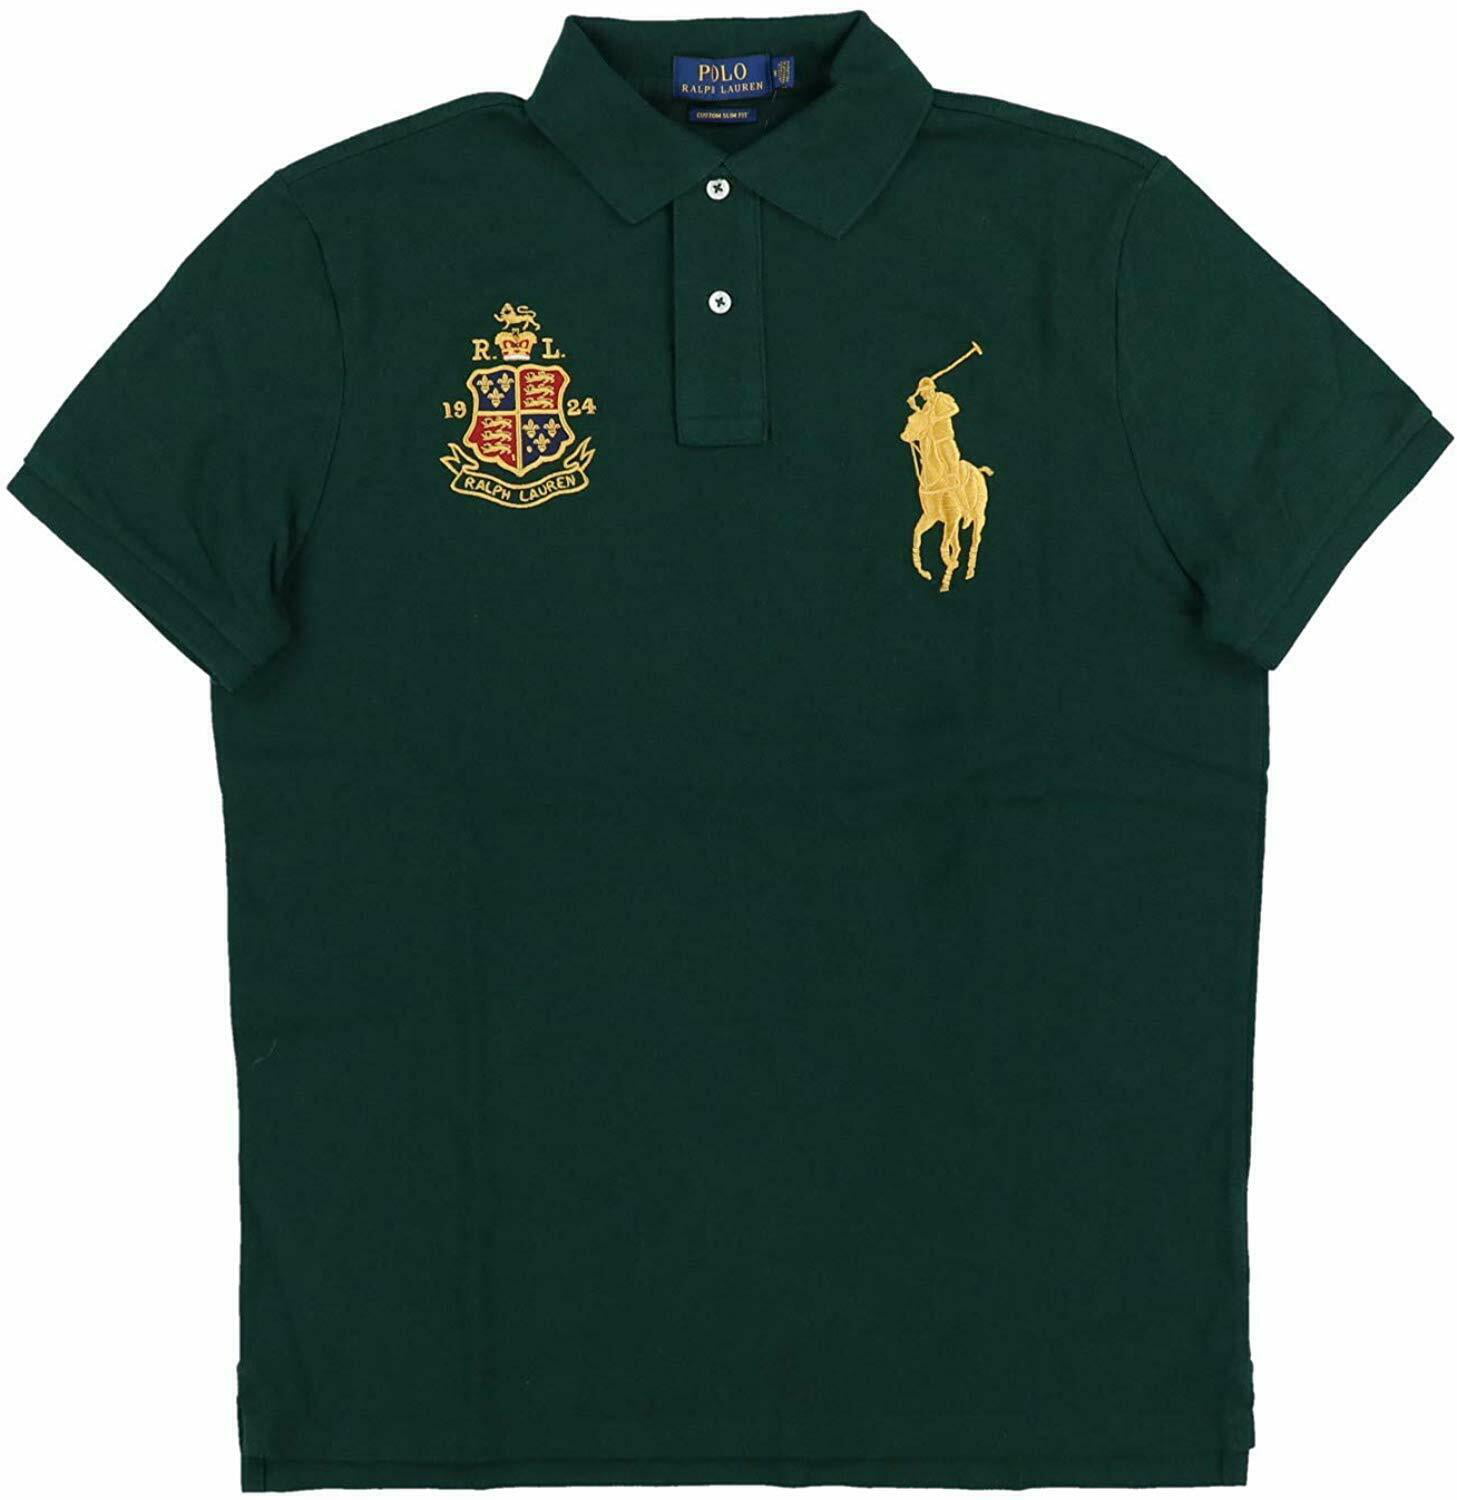 Polo Ralph Lauren - New Polo Ralph Lauren Mens Green Crest Custom Fit Big Pony Polo Shirt 2XL